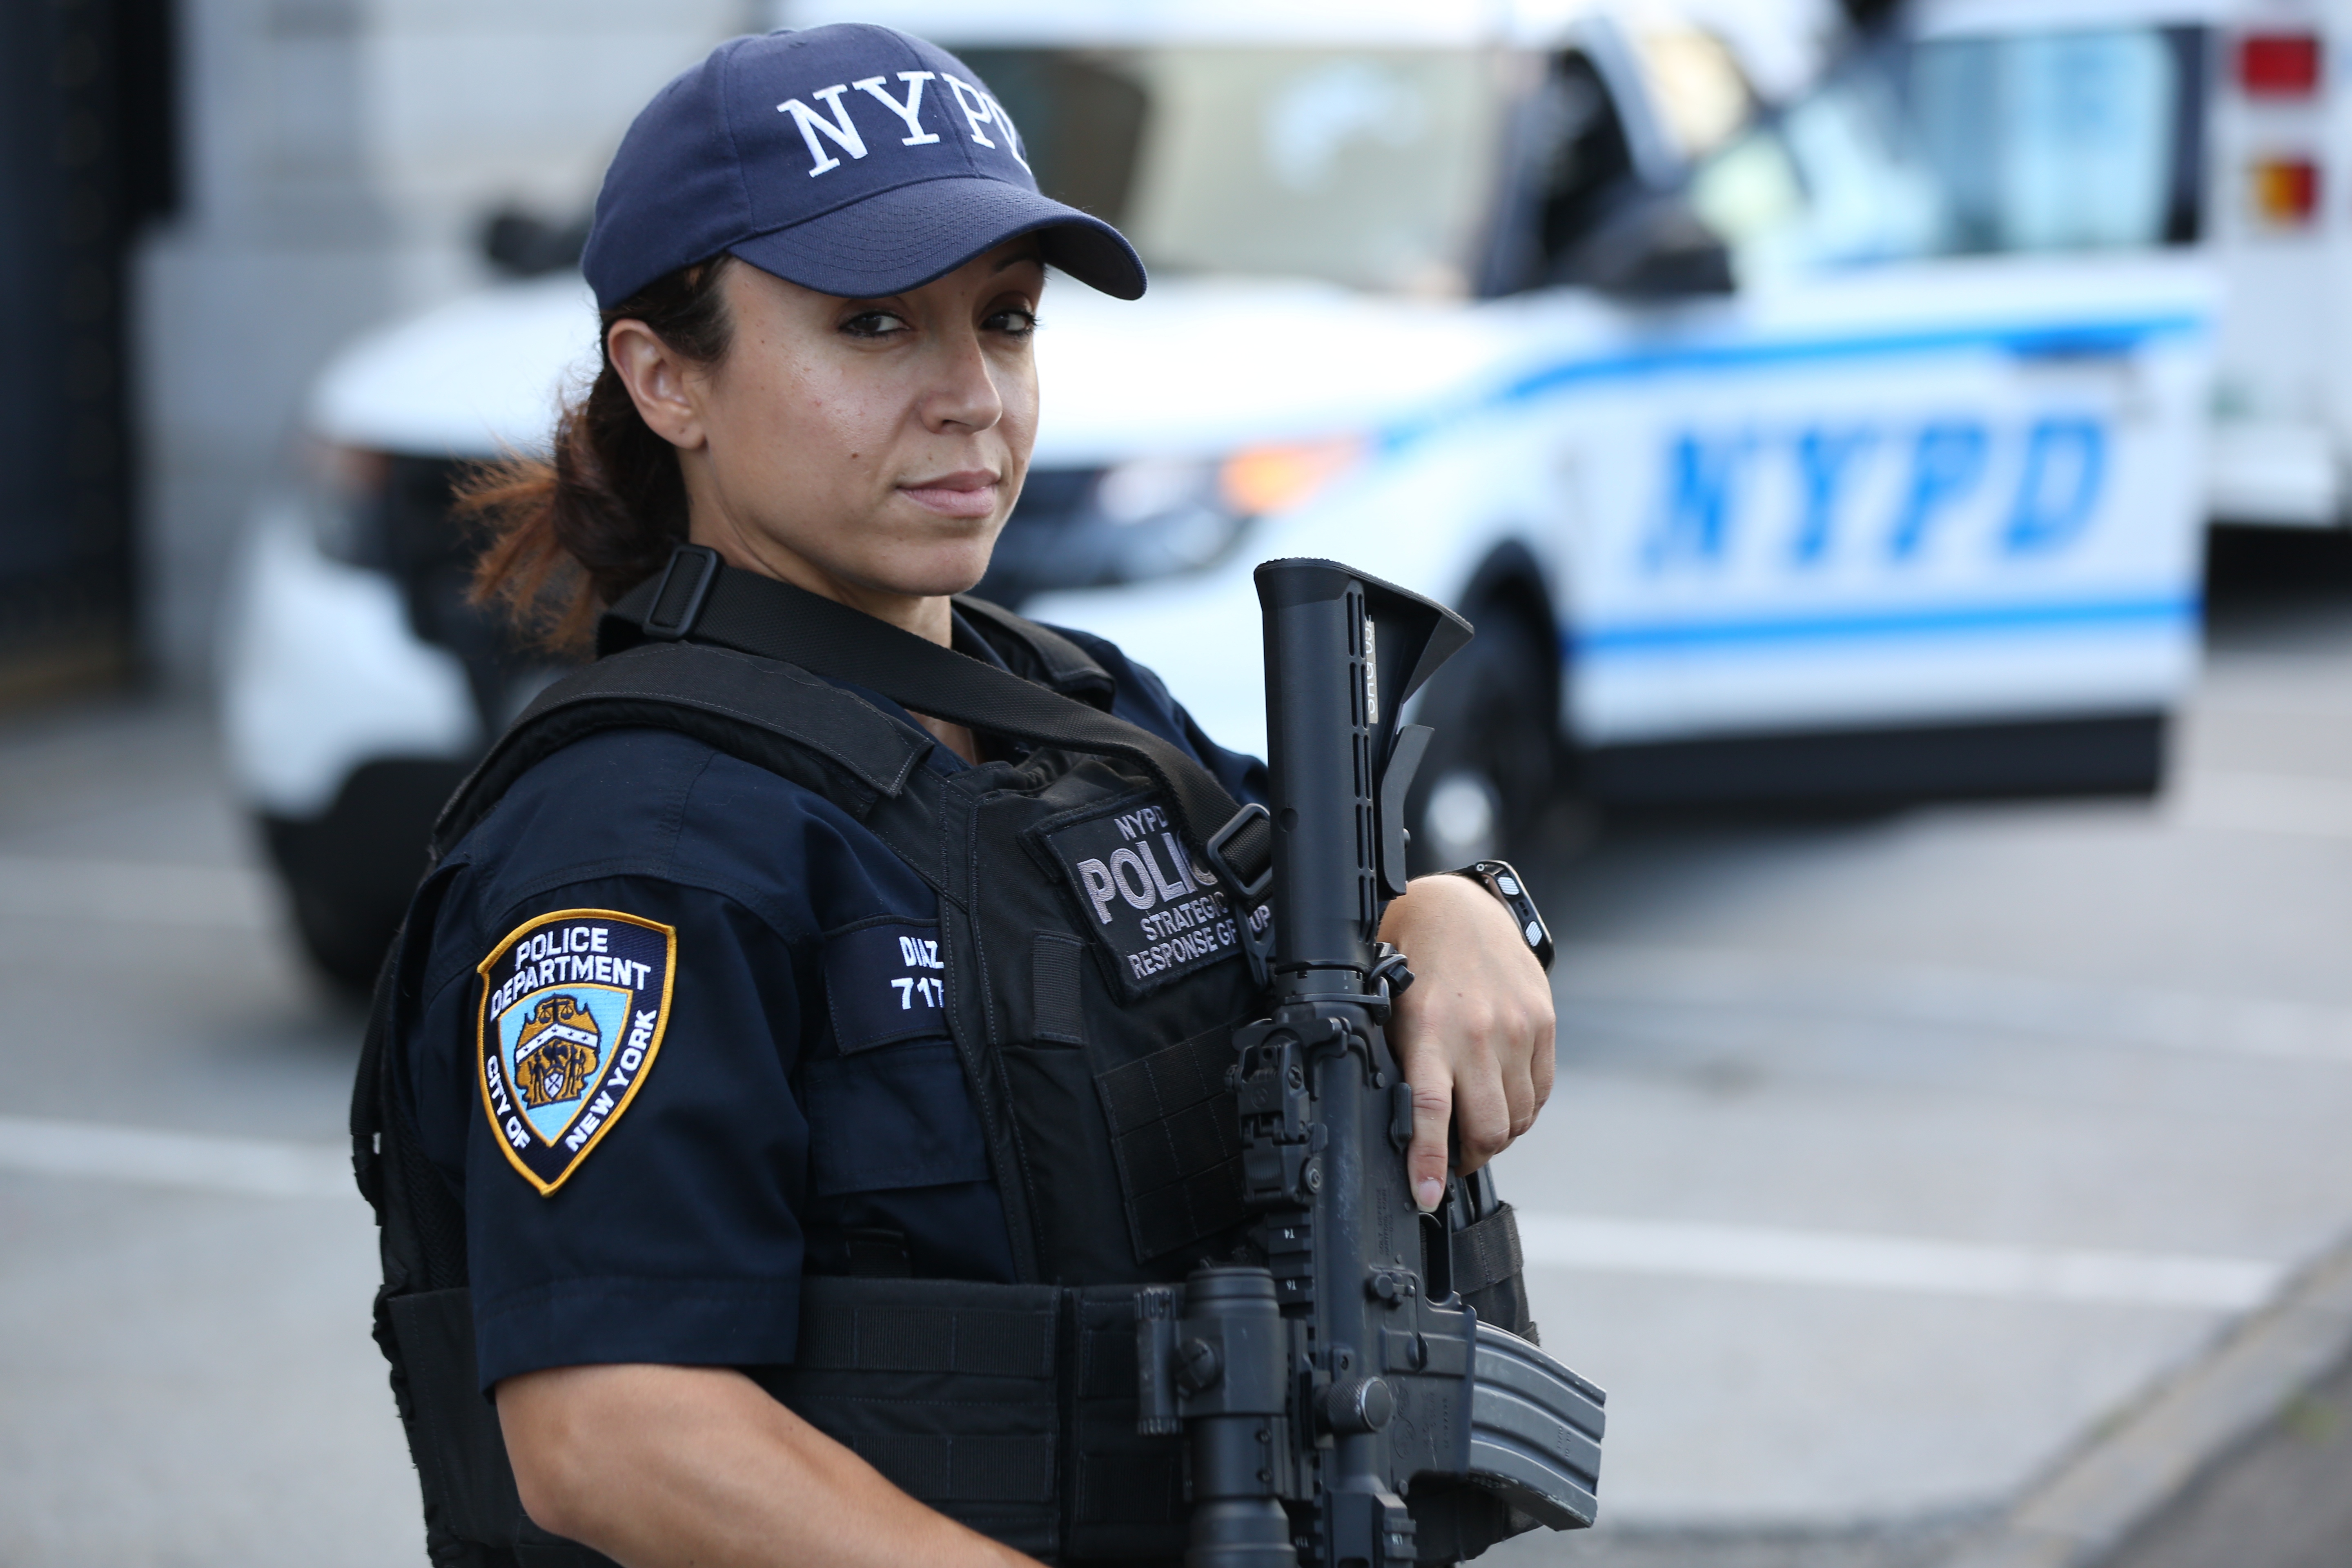 Police - Female Police Officer